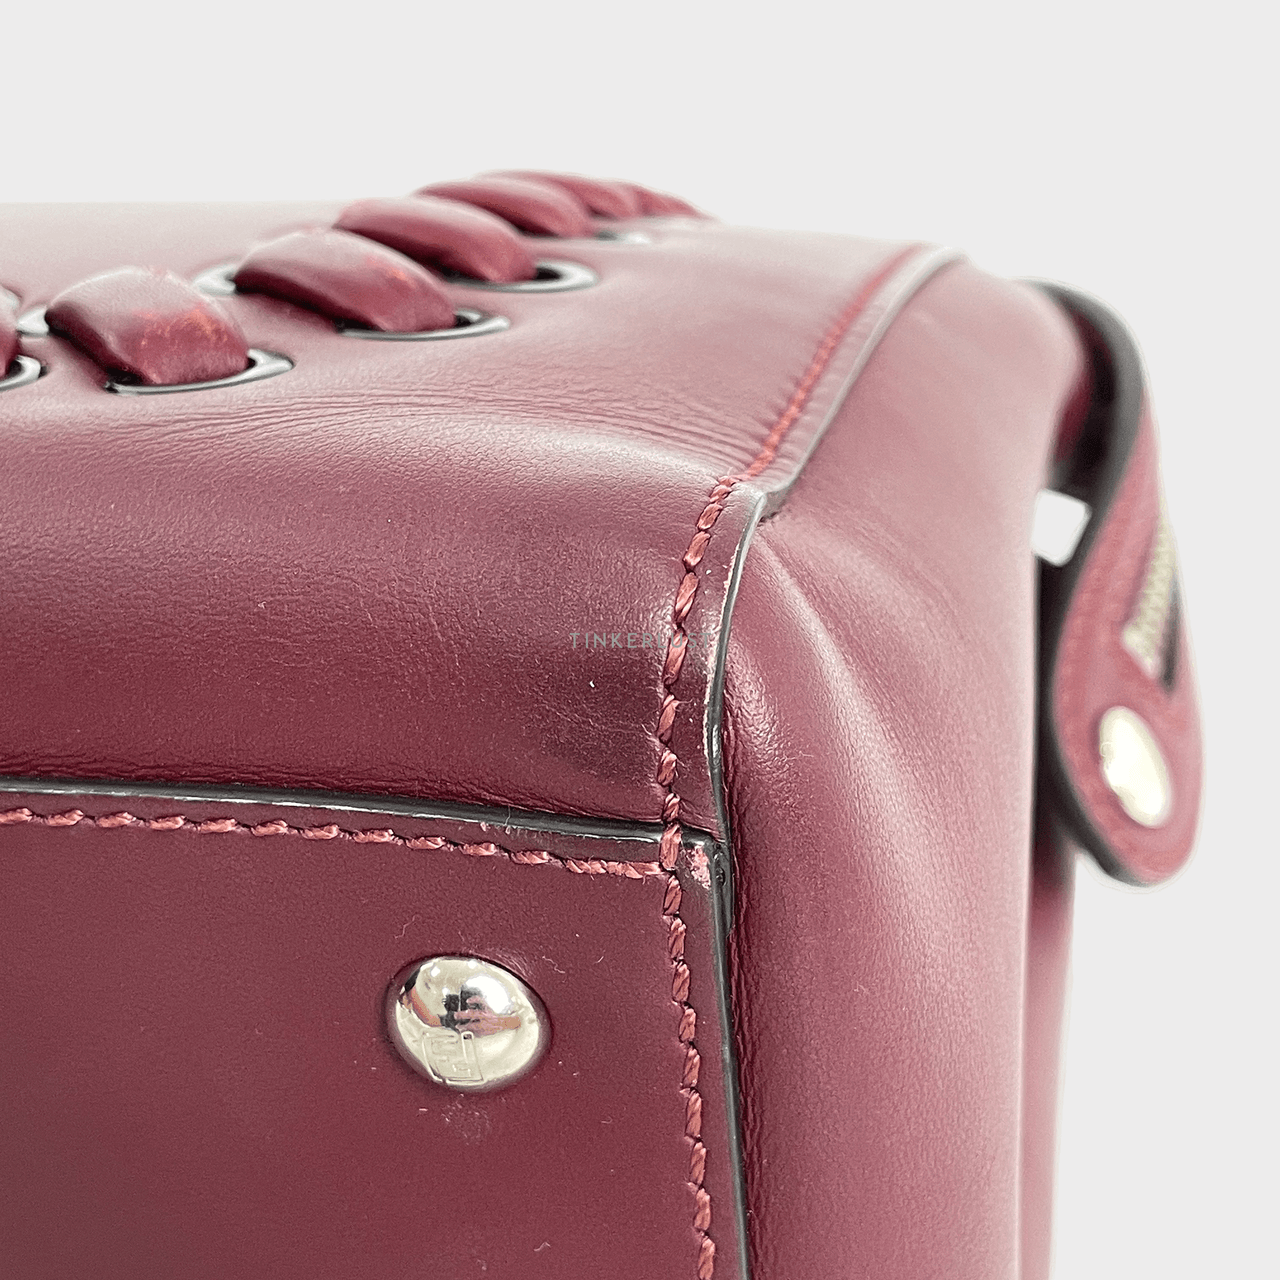 Fendi Burgundy Leather Whipstitch Dotcom Top Handle Bag